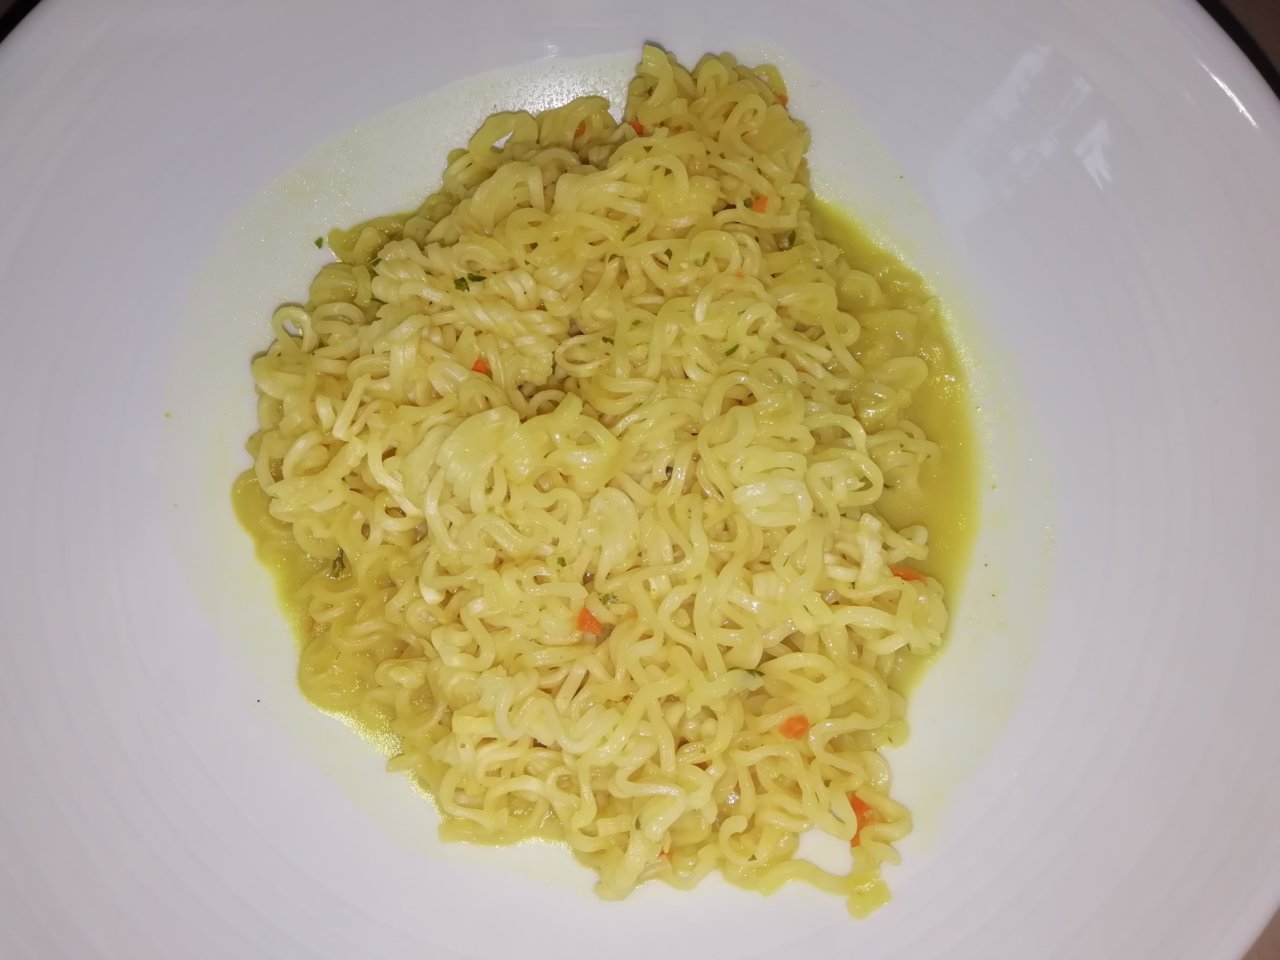 #1619: Aïki "Noodles Curry"